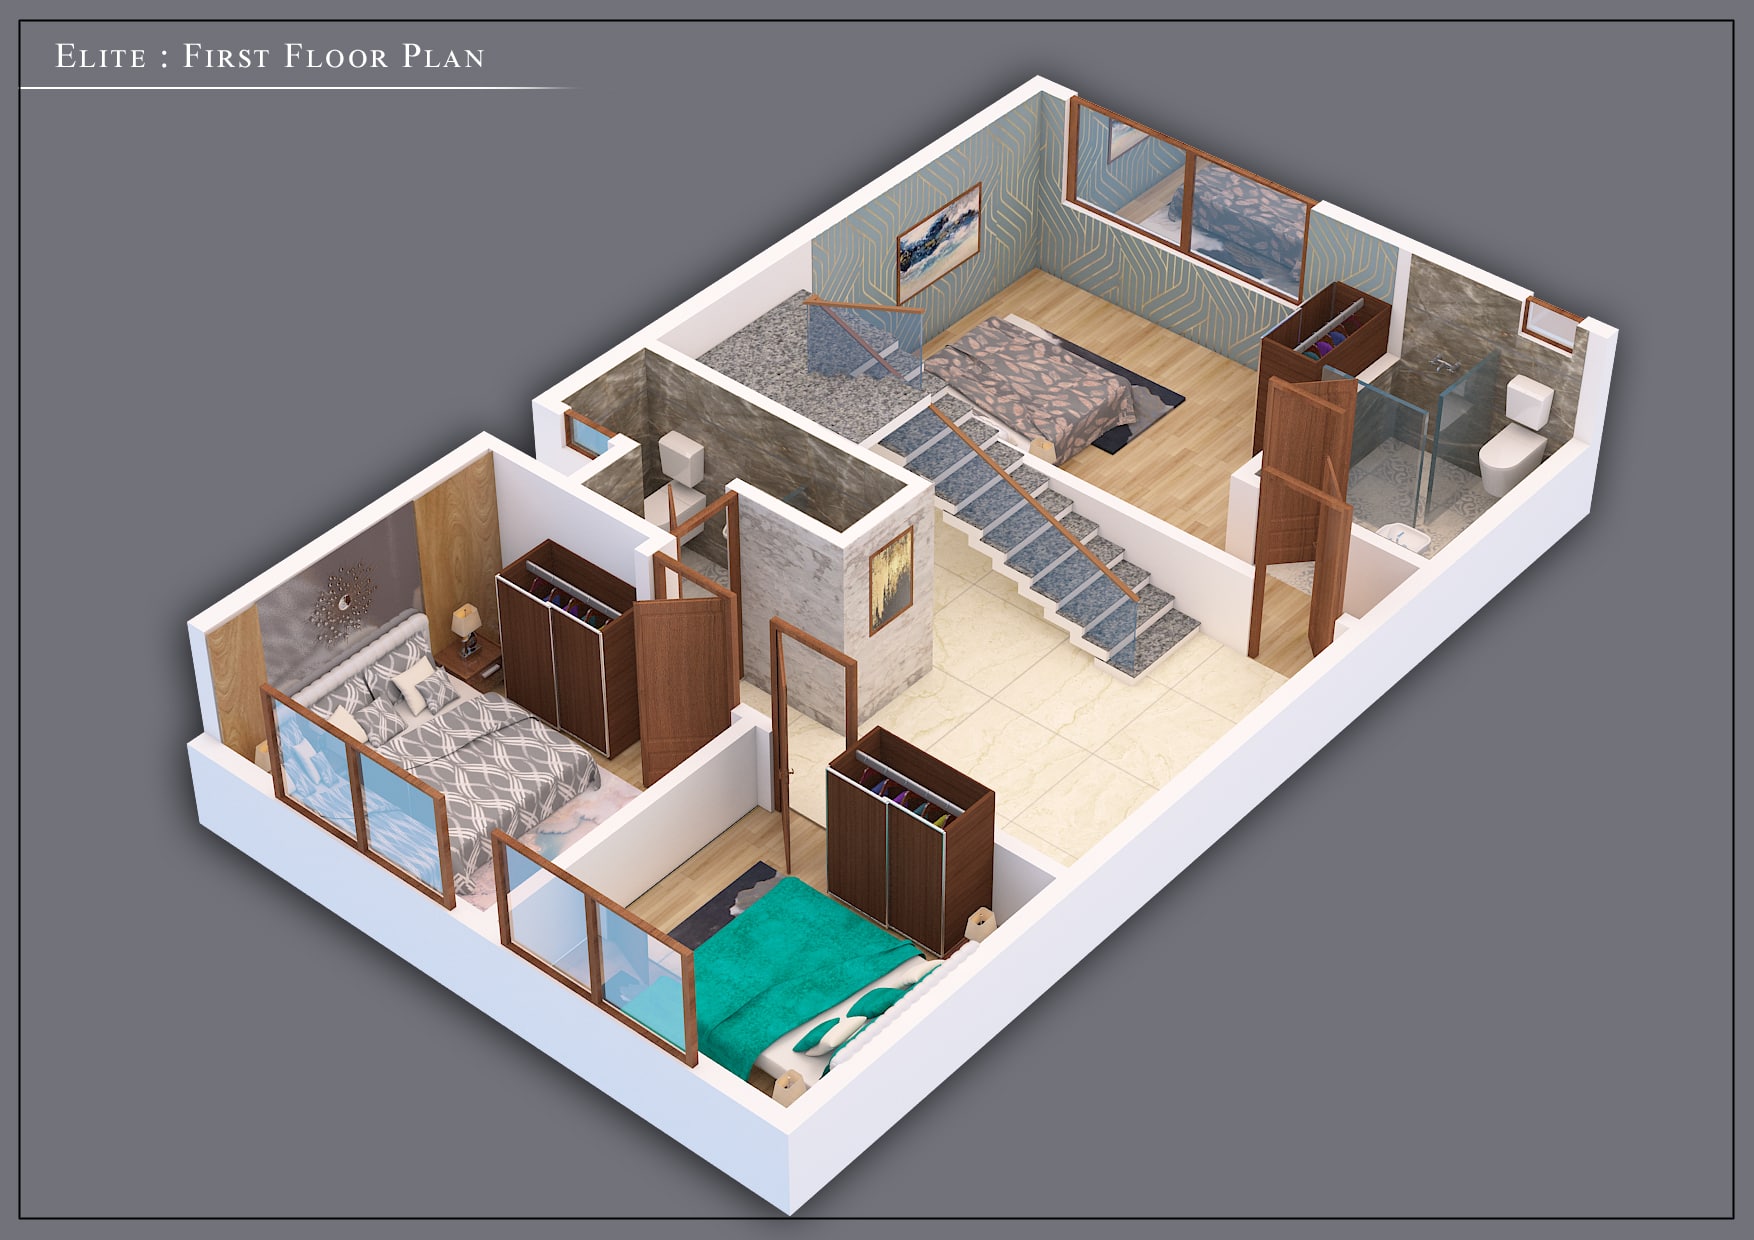 4 BHK Floorplan - Elite First Floor Plan